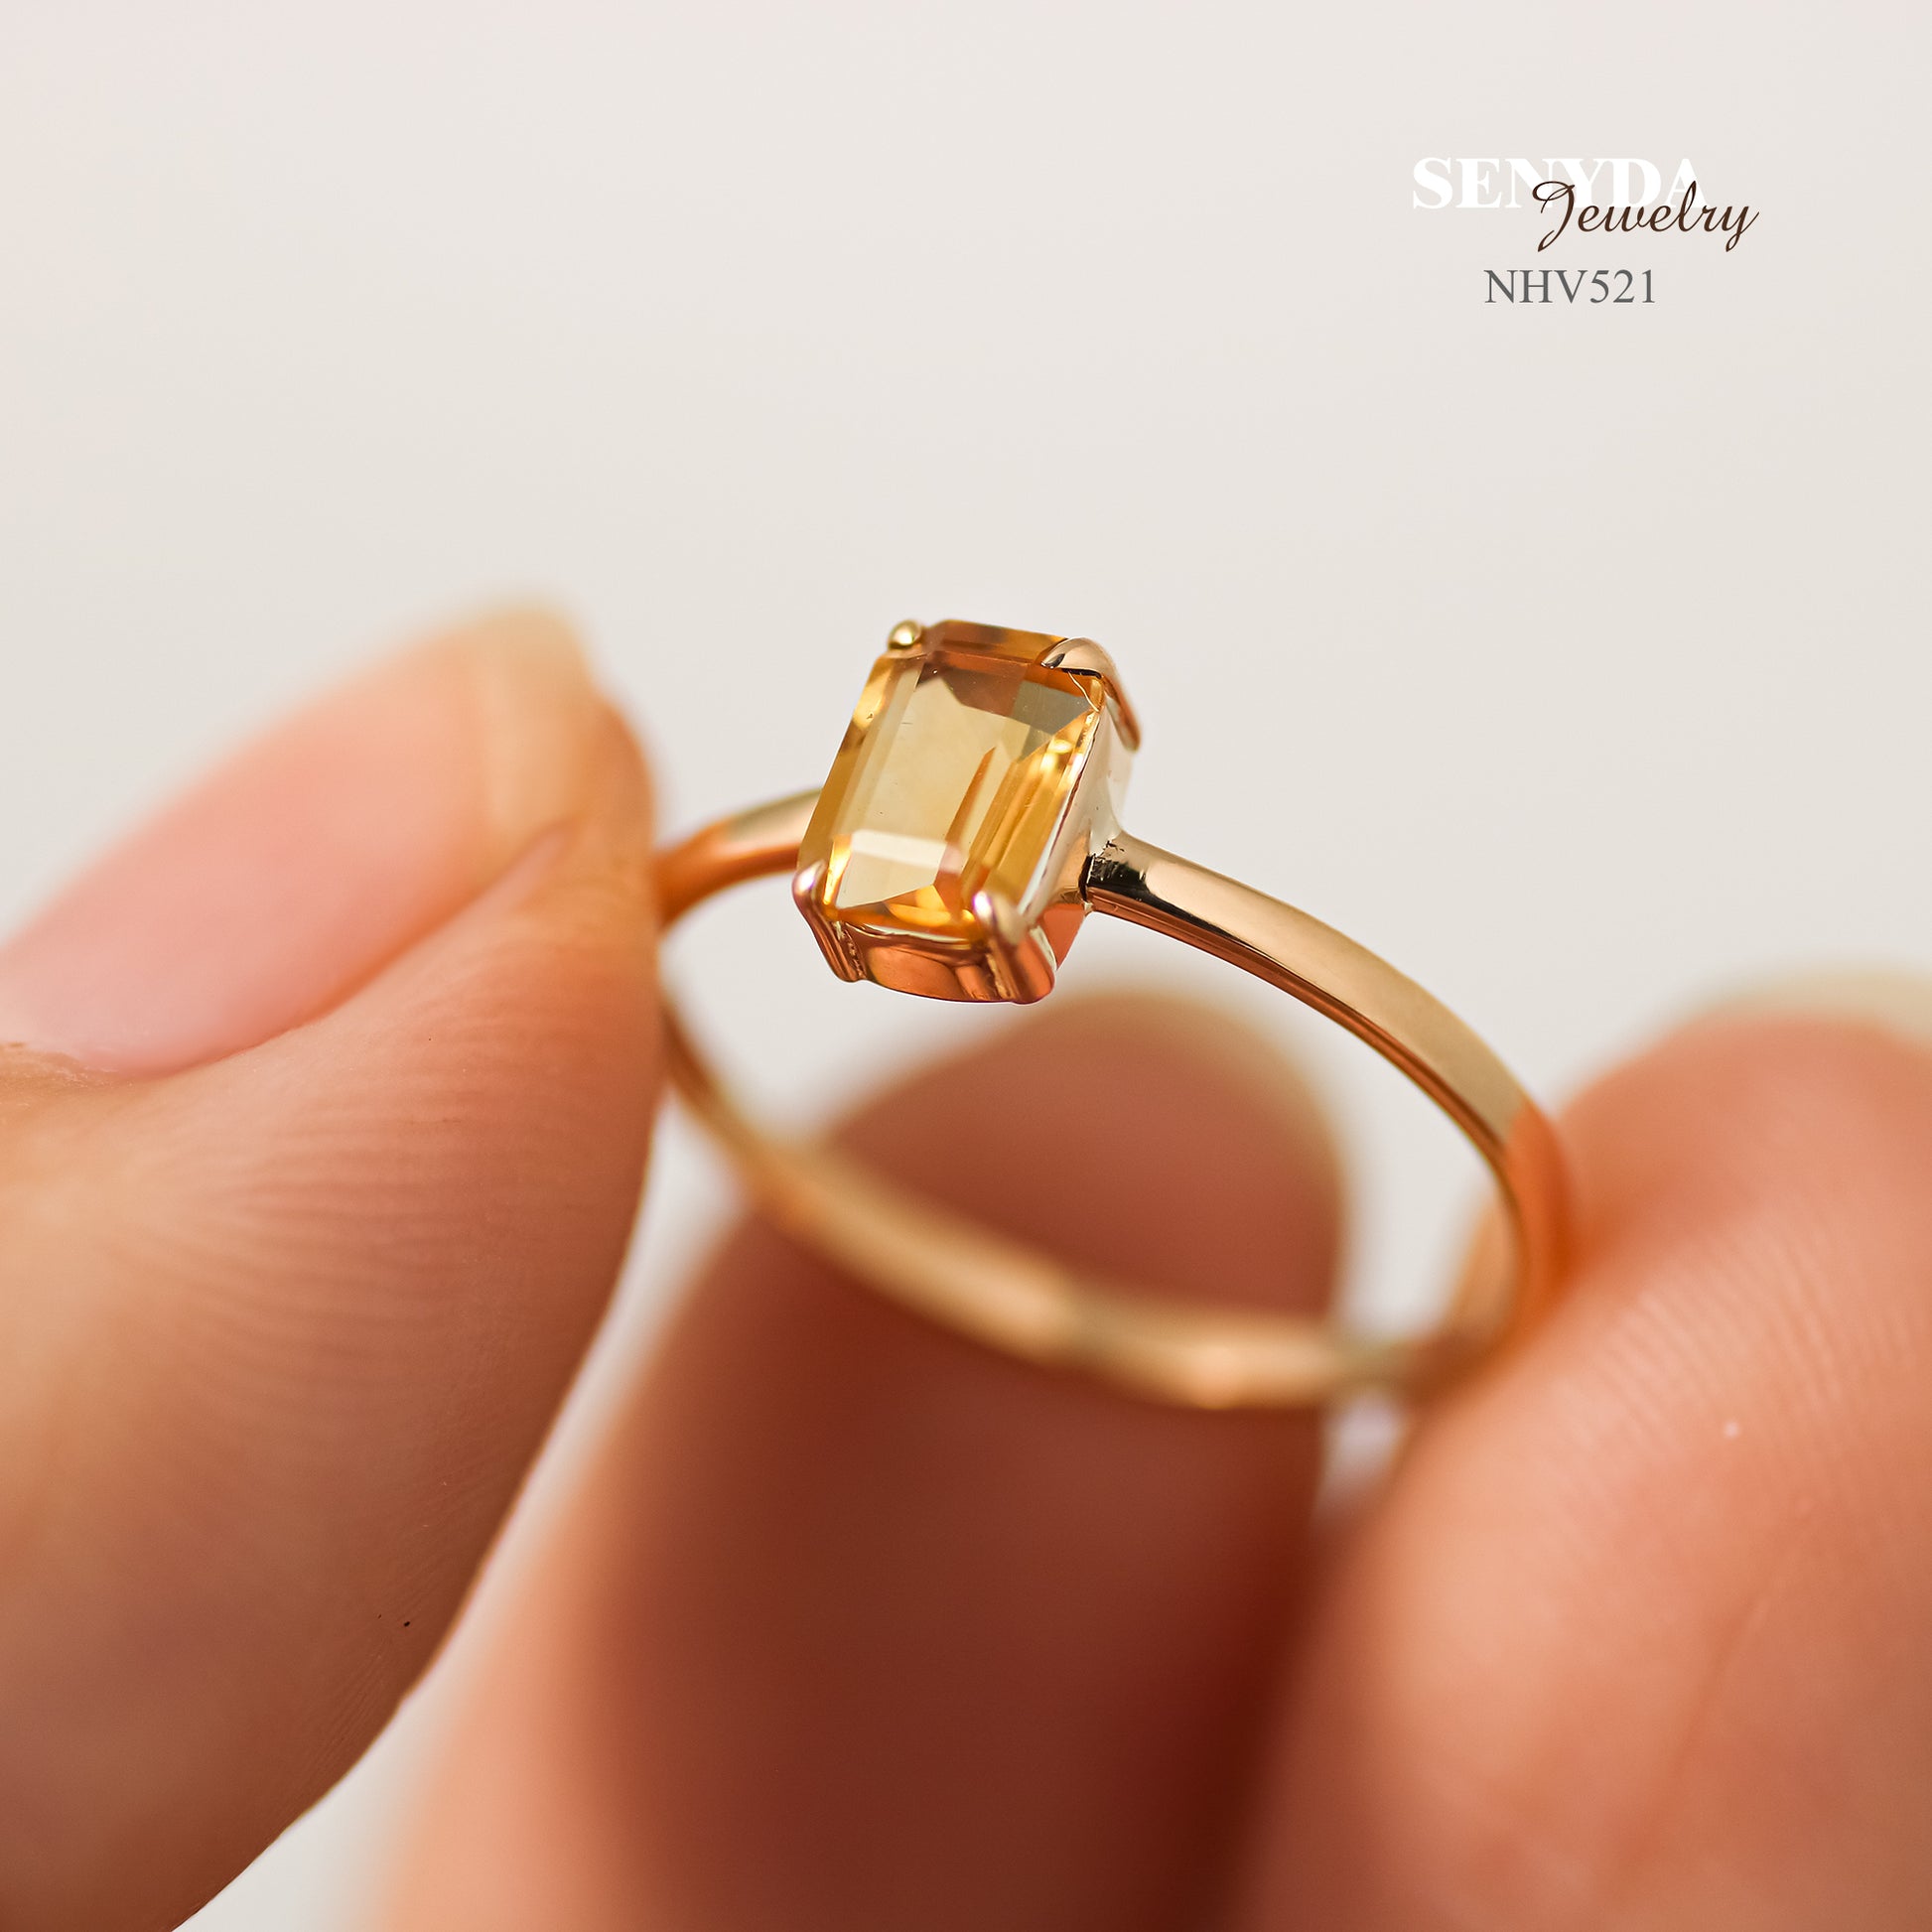 Senyda 16K Solid Gold Emerald - Shaped Brilliant Cut Natural Golden Citrine Ring